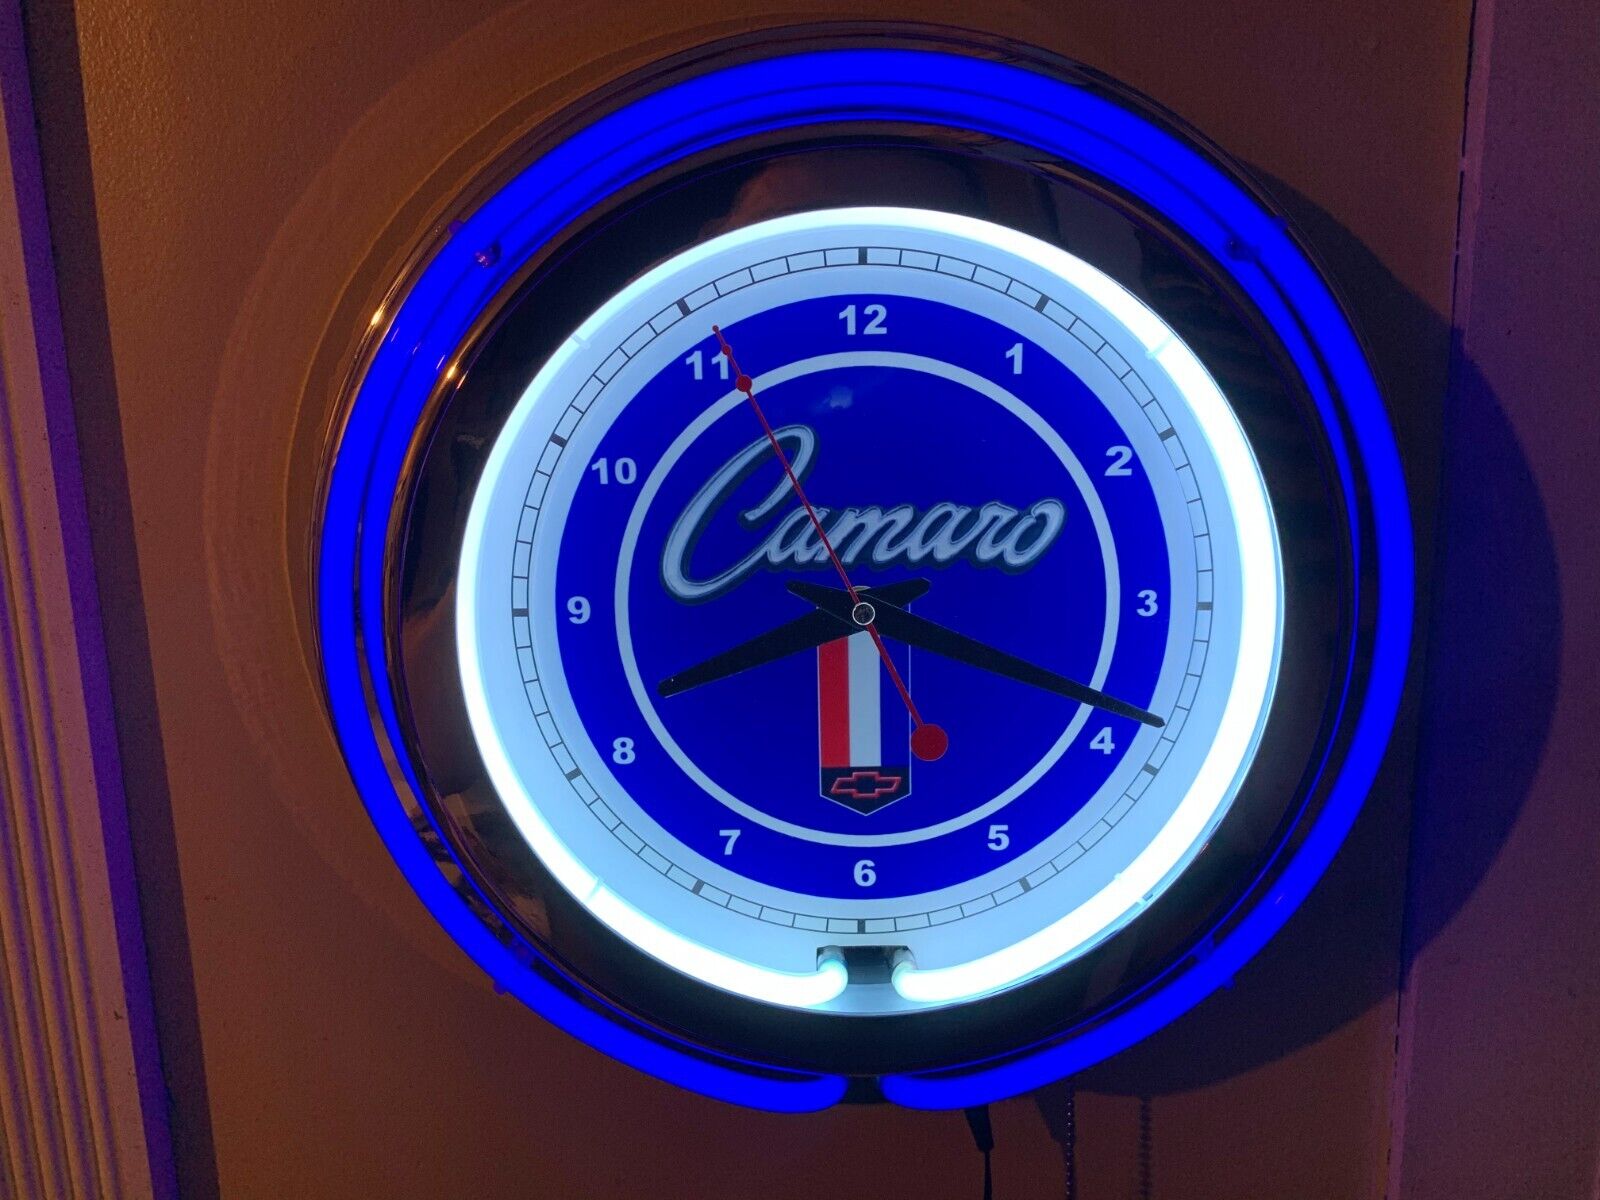 Chevy Camaro Motors Auto Garage Man Cave BLUE Neon Wall Clock Advertising Sign